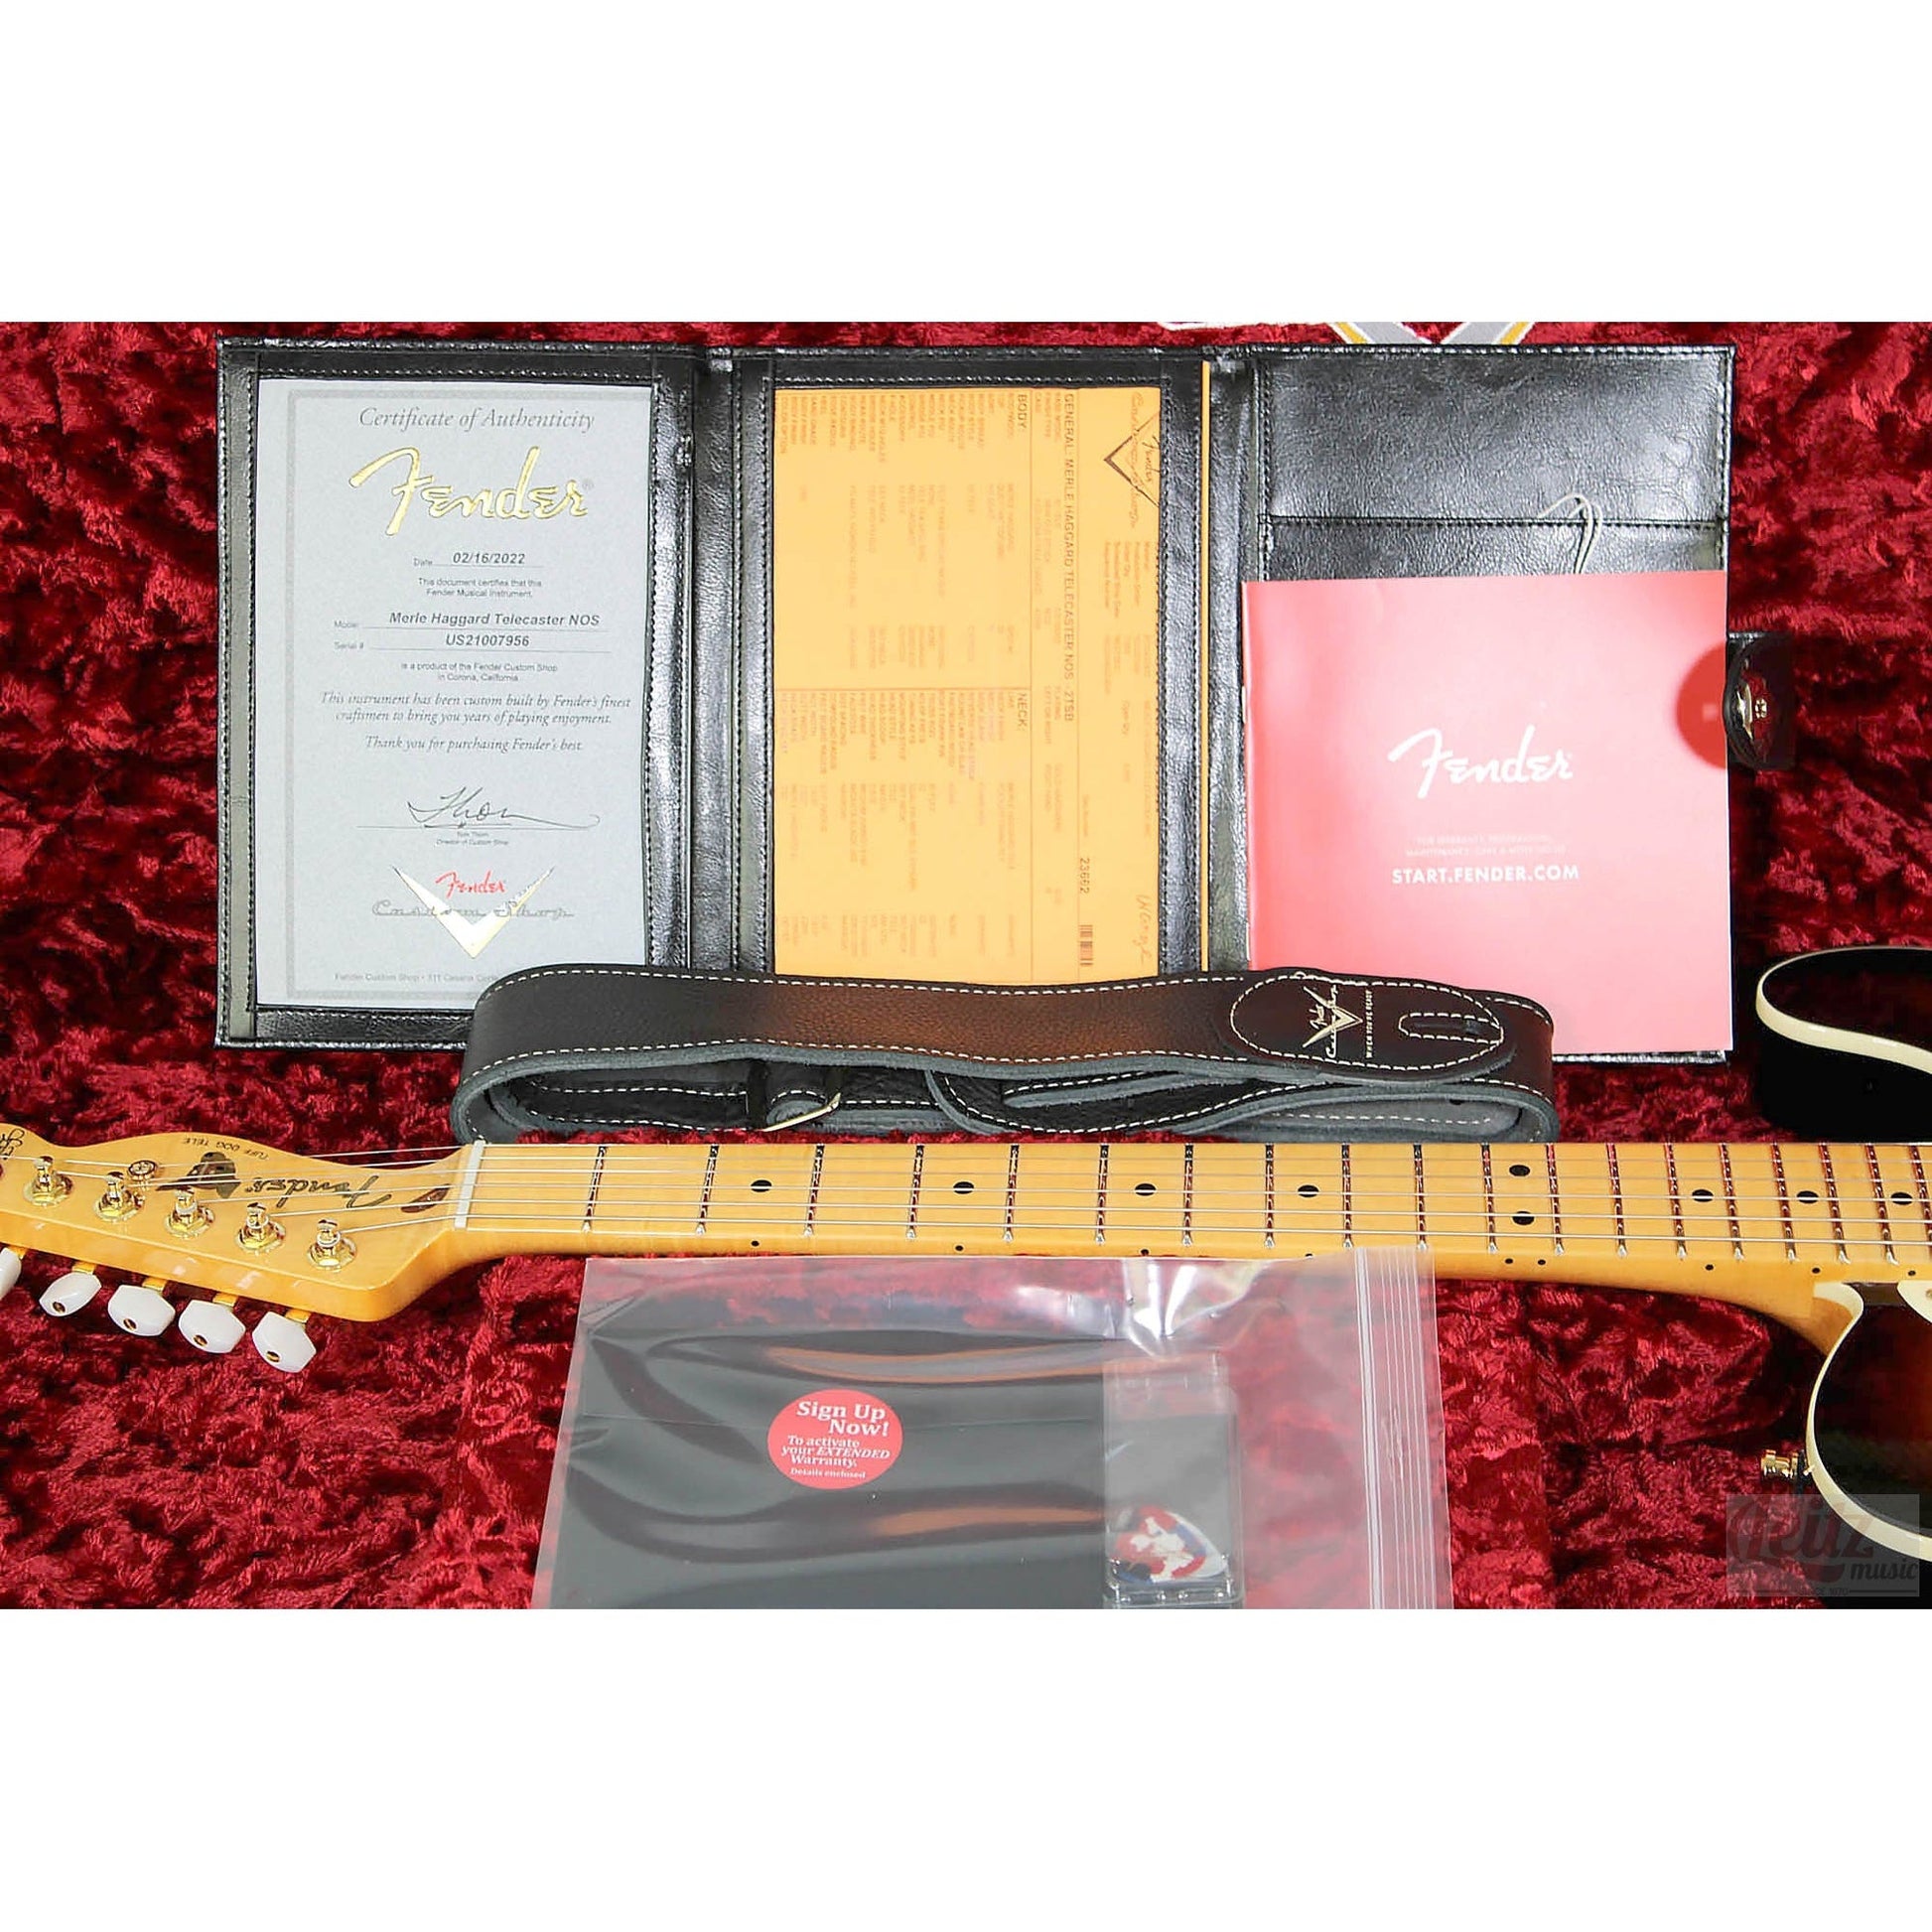 Fender Custom Shop Merle Haggard "Tuff Dog" Telecaster - Leitz Music-717669020156-US21007956